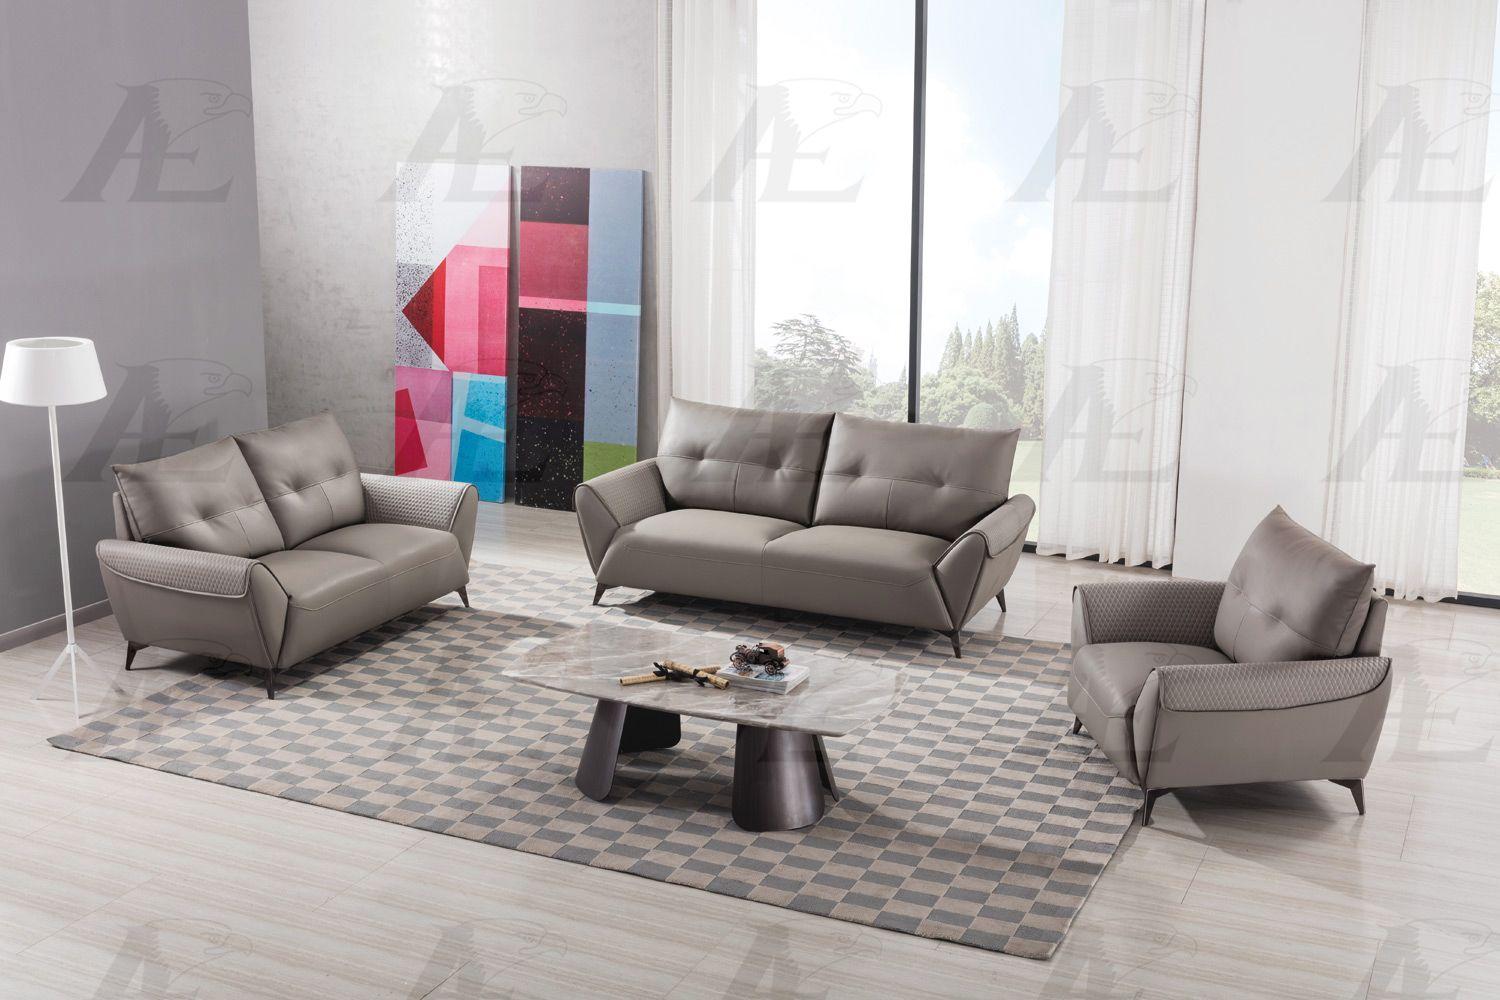 Contemporary, Modern Sofa Set AE618-WG AE618-WG -Set-3 in Warm Gray Microfiber